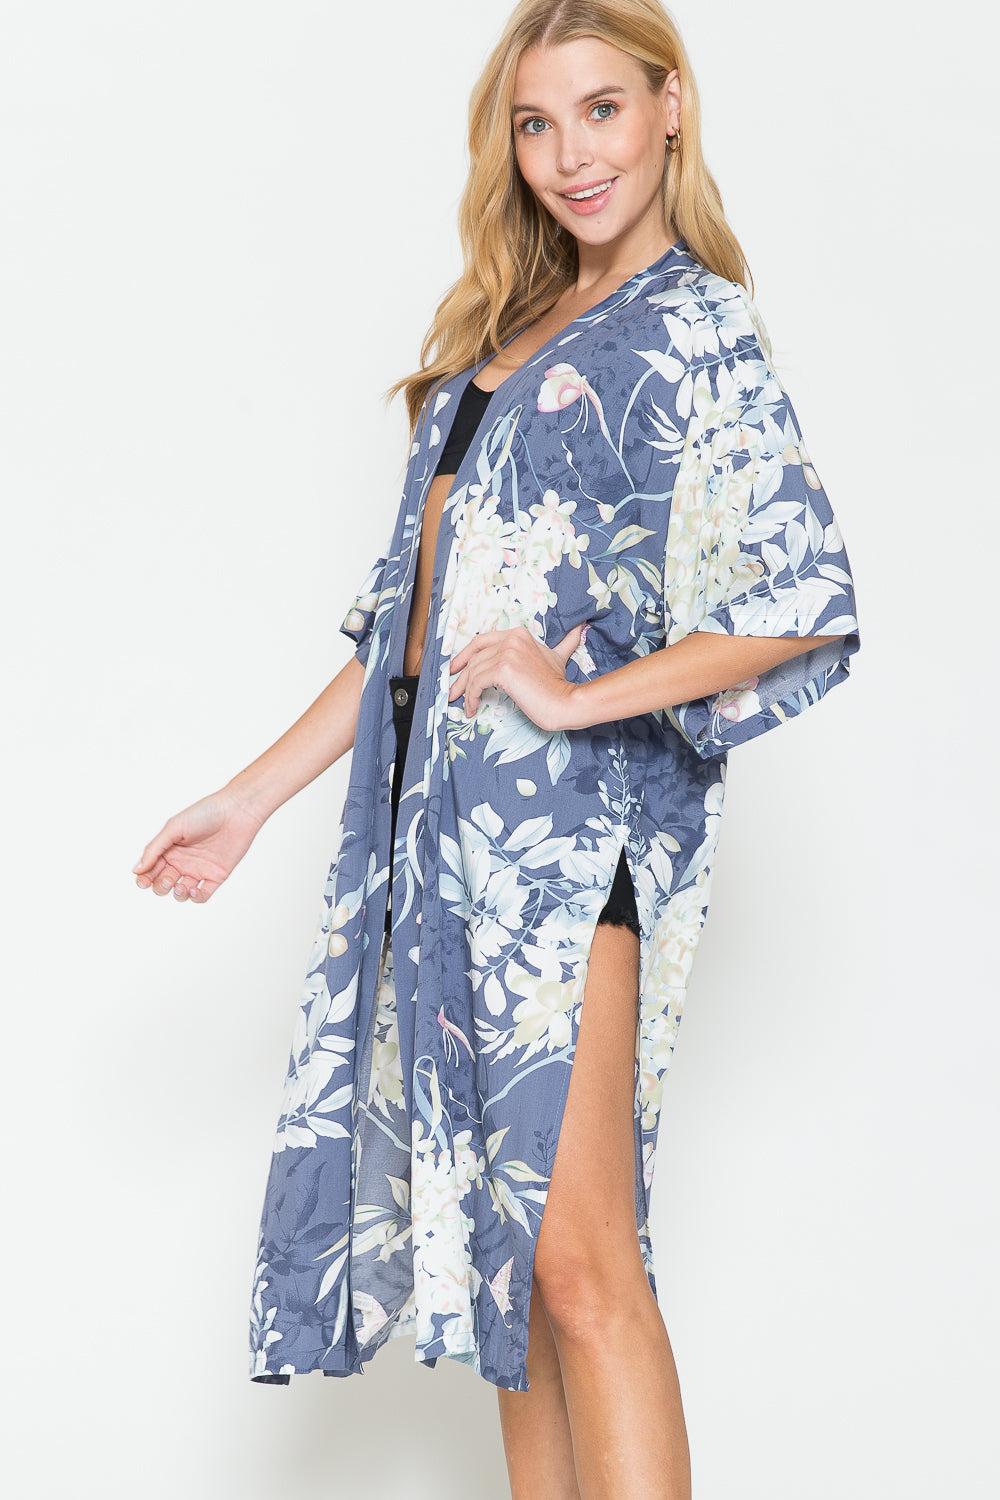 Justin Taylor Botanical Print Split Cover Up Kimono - Posh Country Lifestyle Marketplace